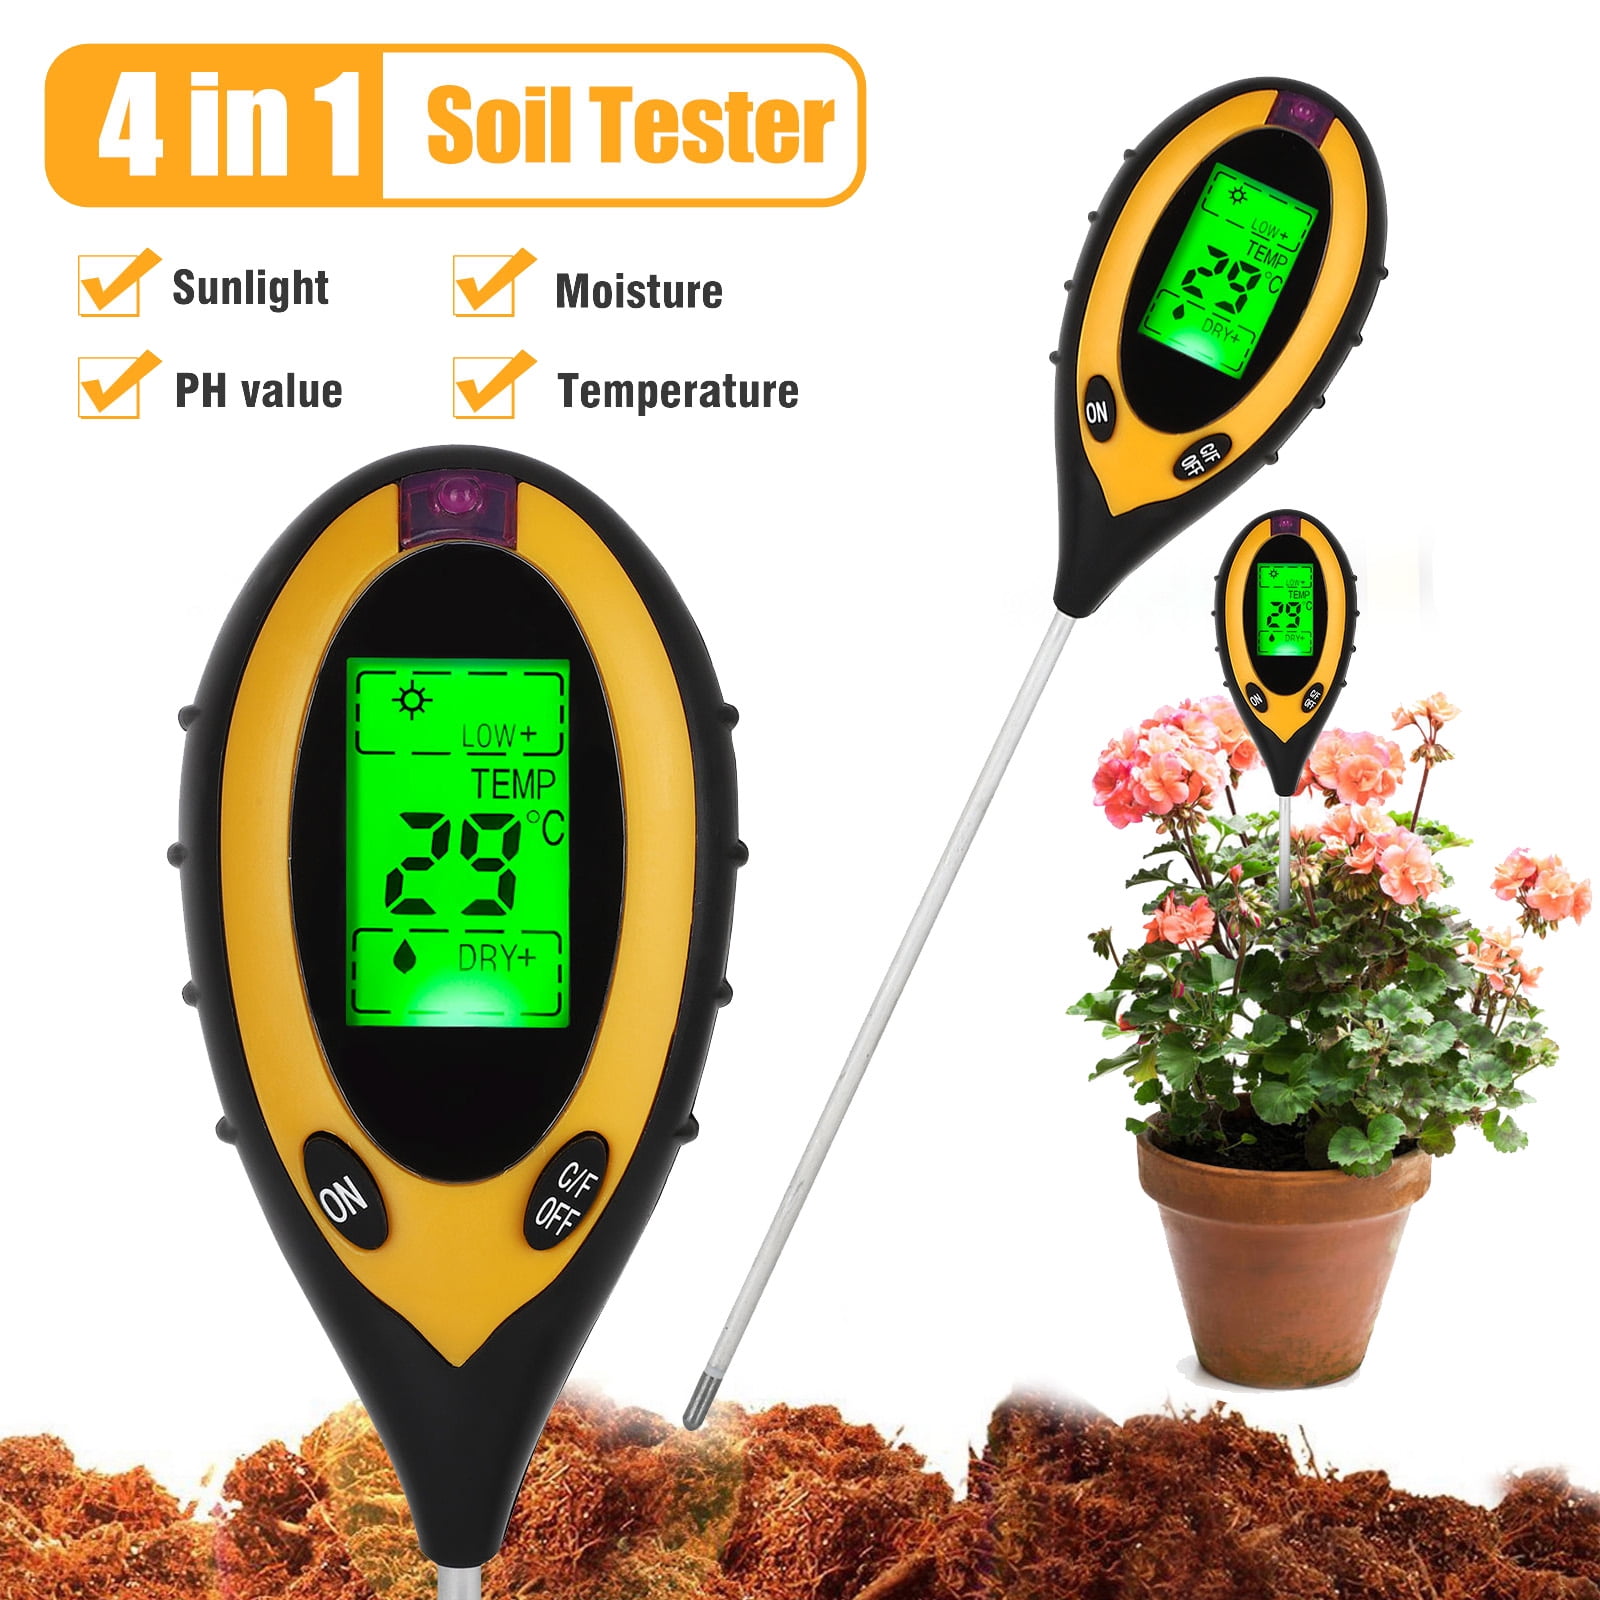 Probe Tester for House Outdoor Garden Lawn Plant Water Meter MASiKEN Soil Moisture Meter Soil Test Kit 5-in-1 PH Meter/Thermometer/Plant Light/Soil Humidity/Air Hygrometer Tester and Monitor S2 